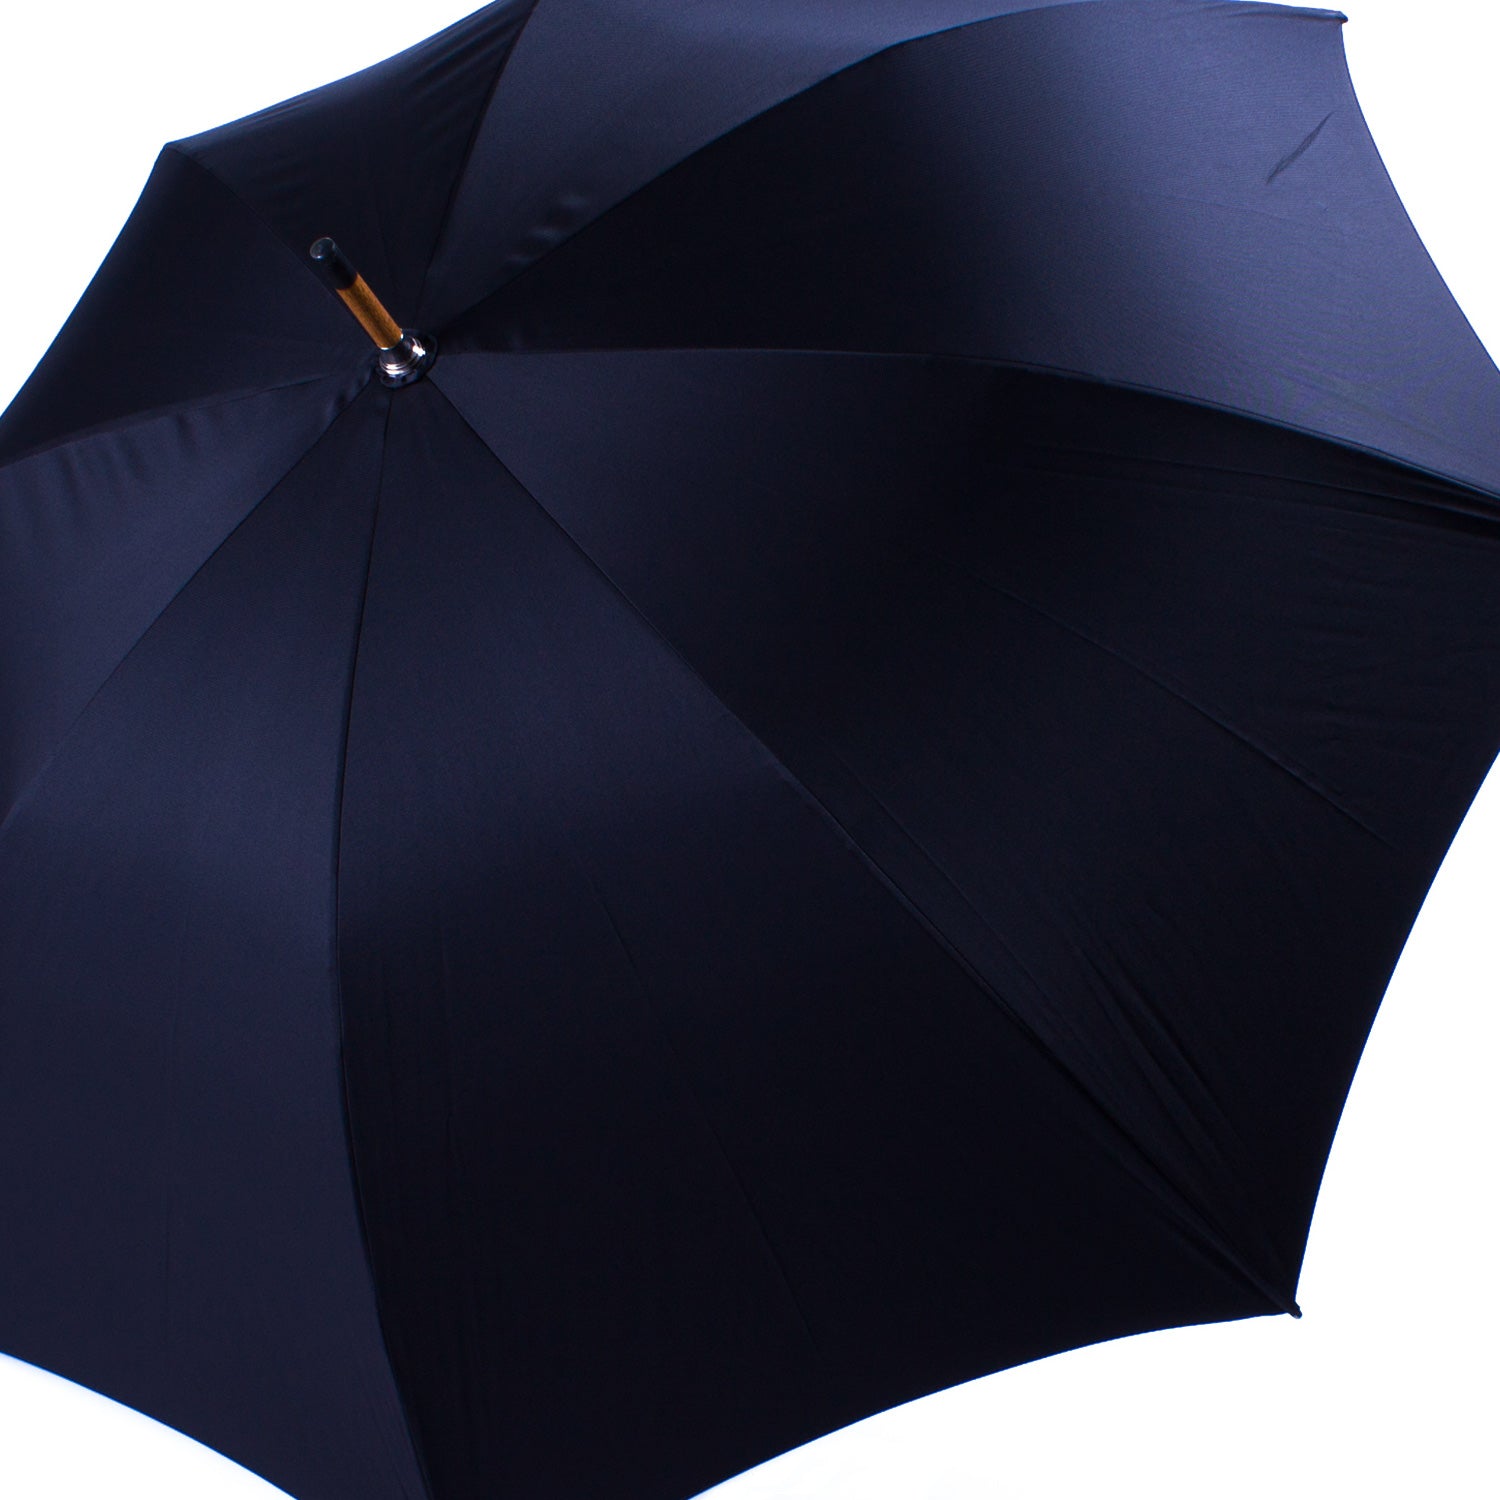 Maglia Francesco Black Doorman Umbrella with Maplewood Handle